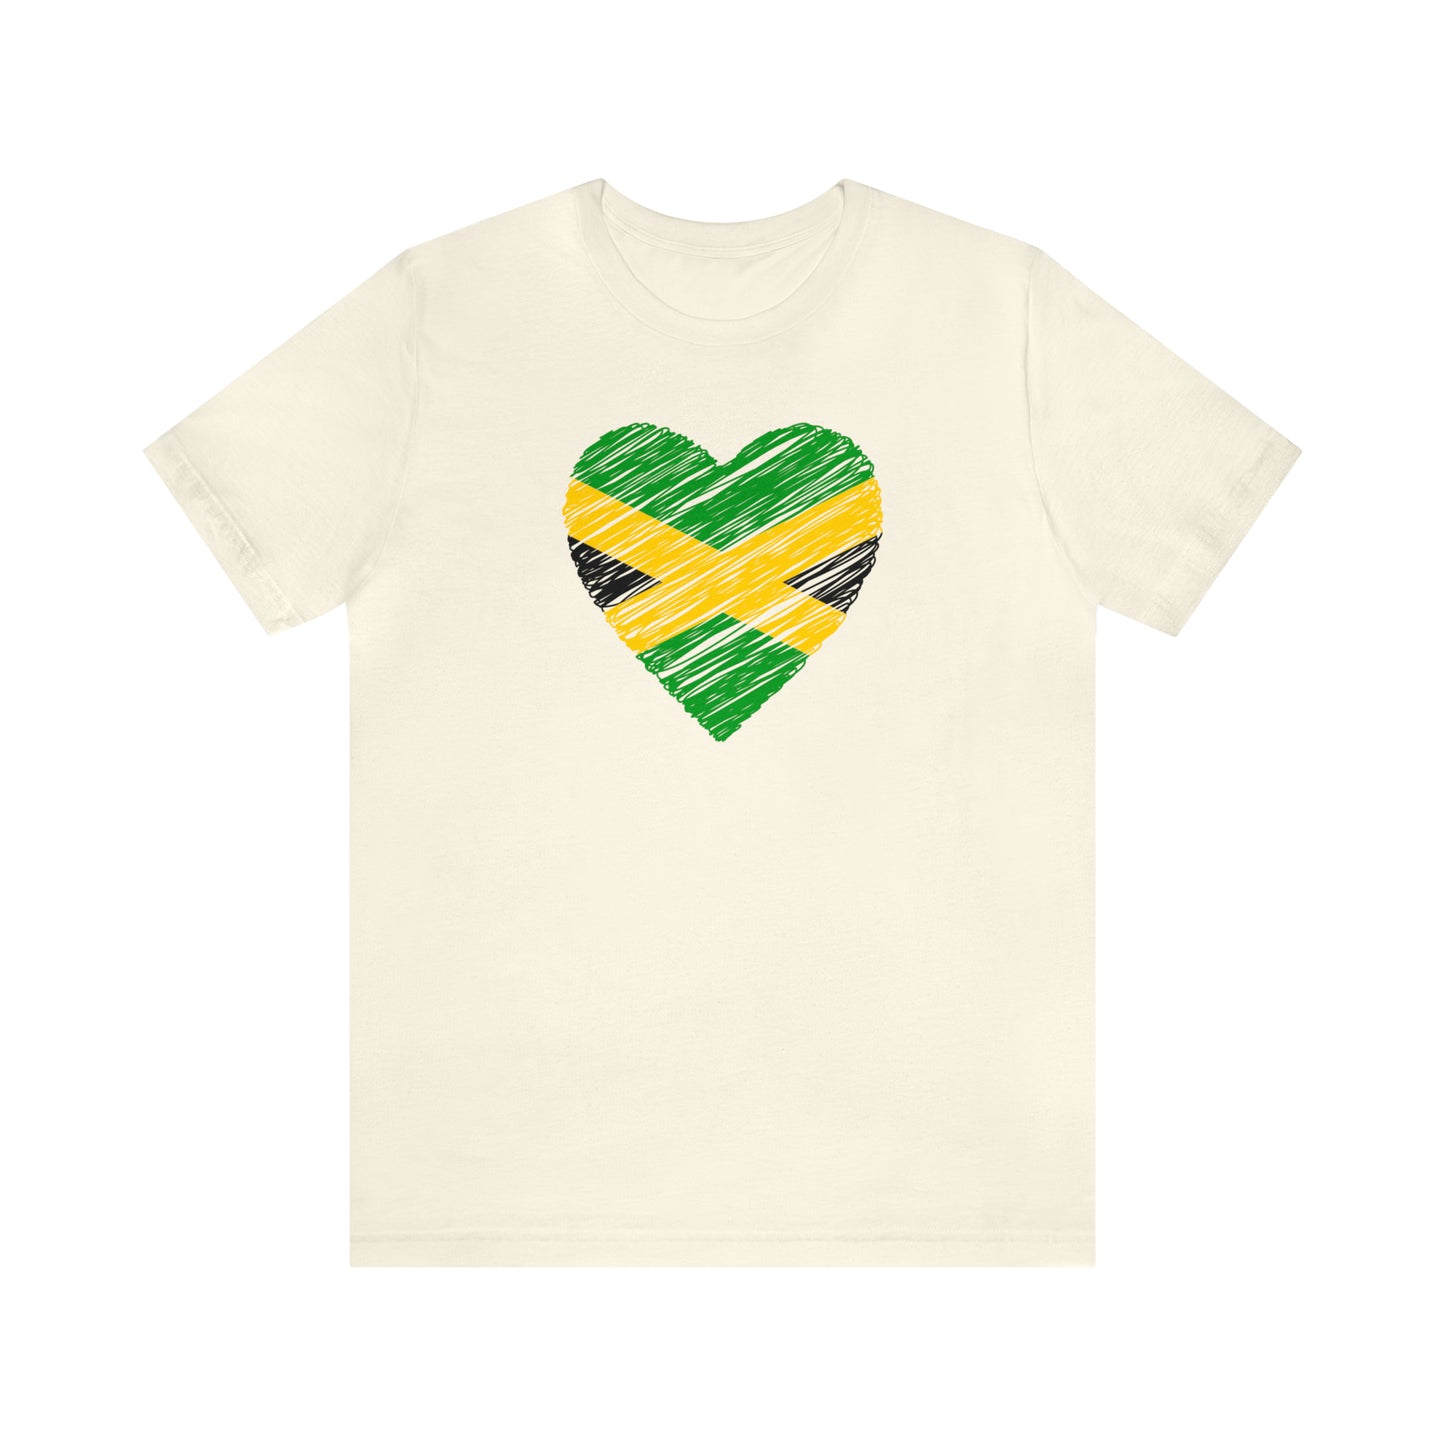 Jamaica Flag Shirt for Women, Summer Vacation Shirt, Bob Marley Shirt, Jamaica Travel Gift, Cruise Vacation Shirt, Carnival Shirt for Women